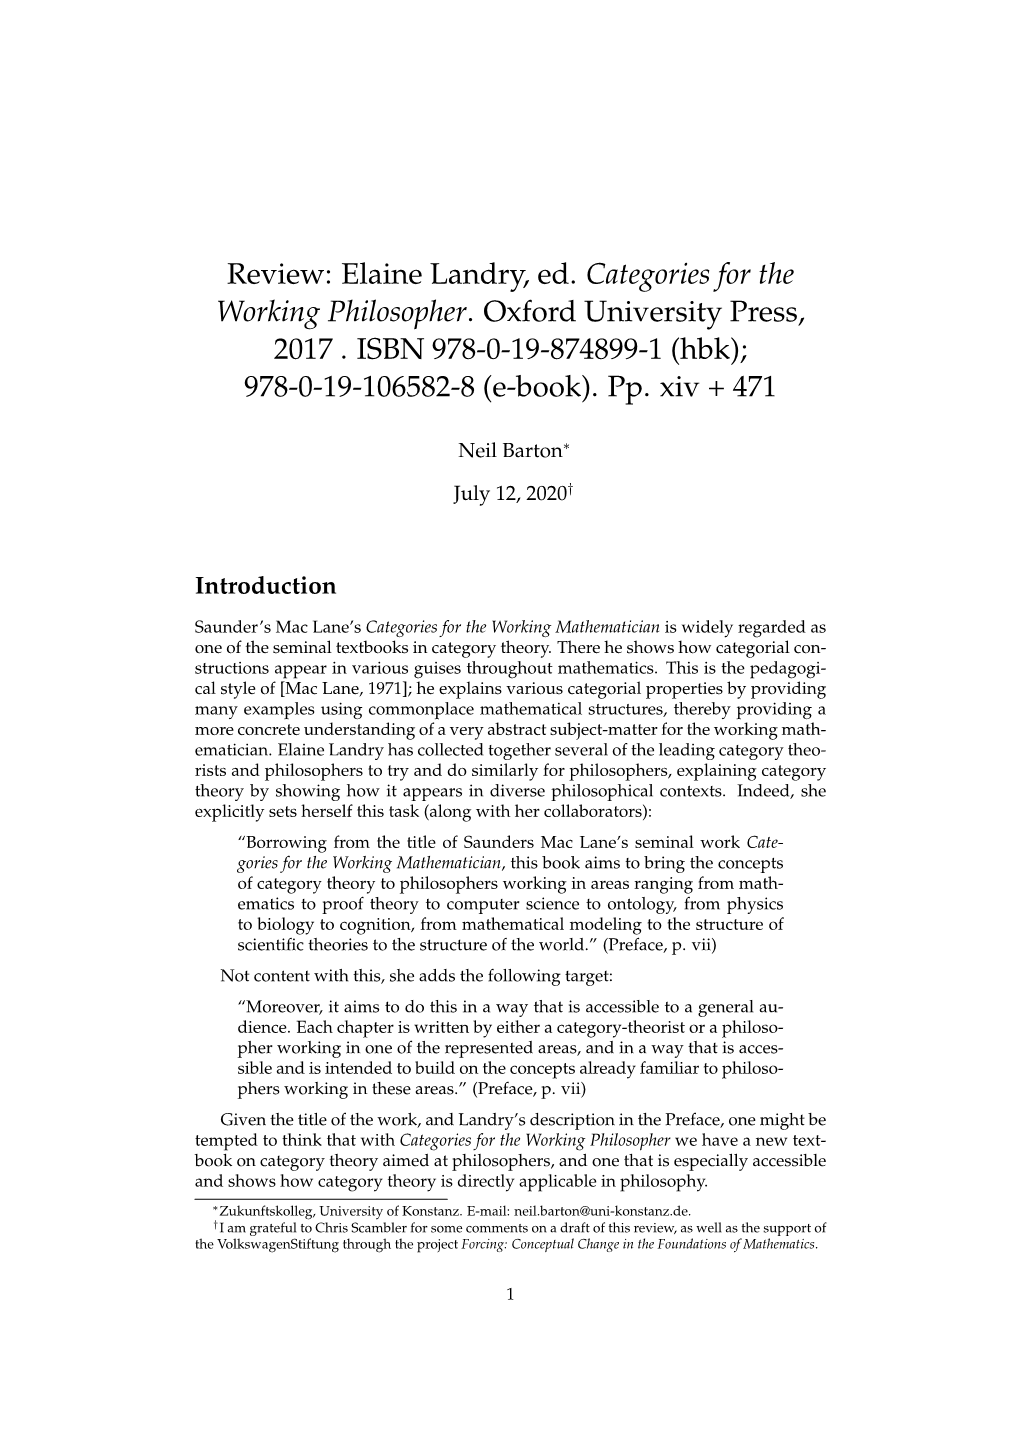 Elaine Landry, Ed. Categories for the Working Philosopher